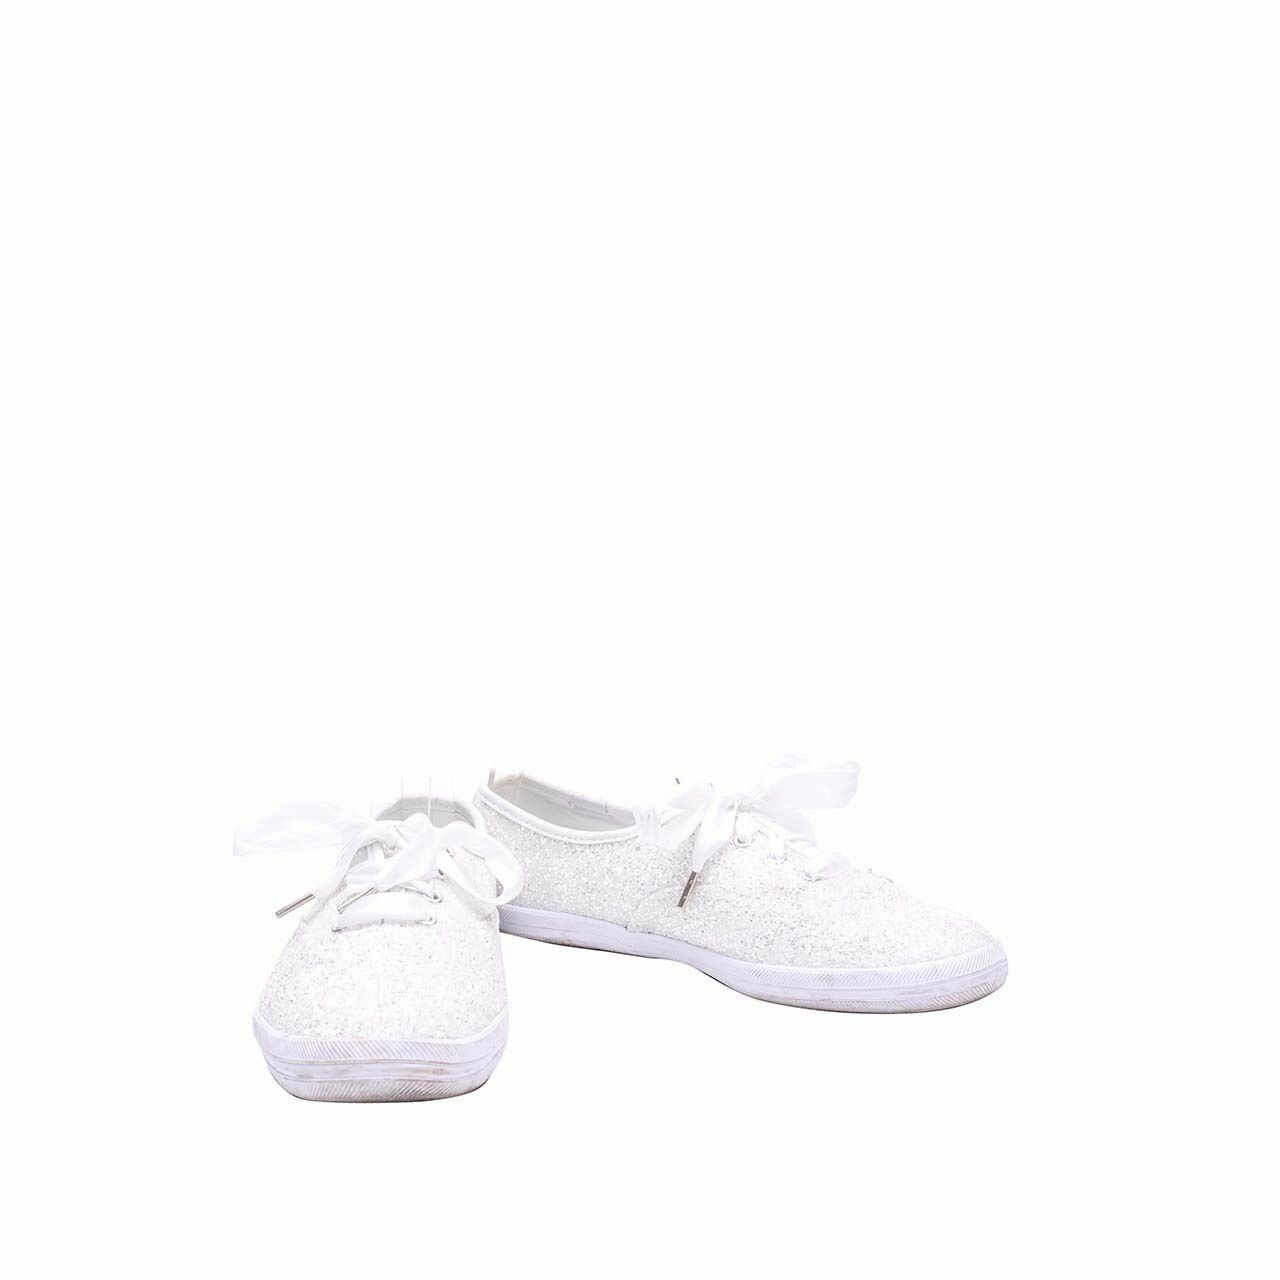 Keds For Kate Spade White Glitter Sneakers